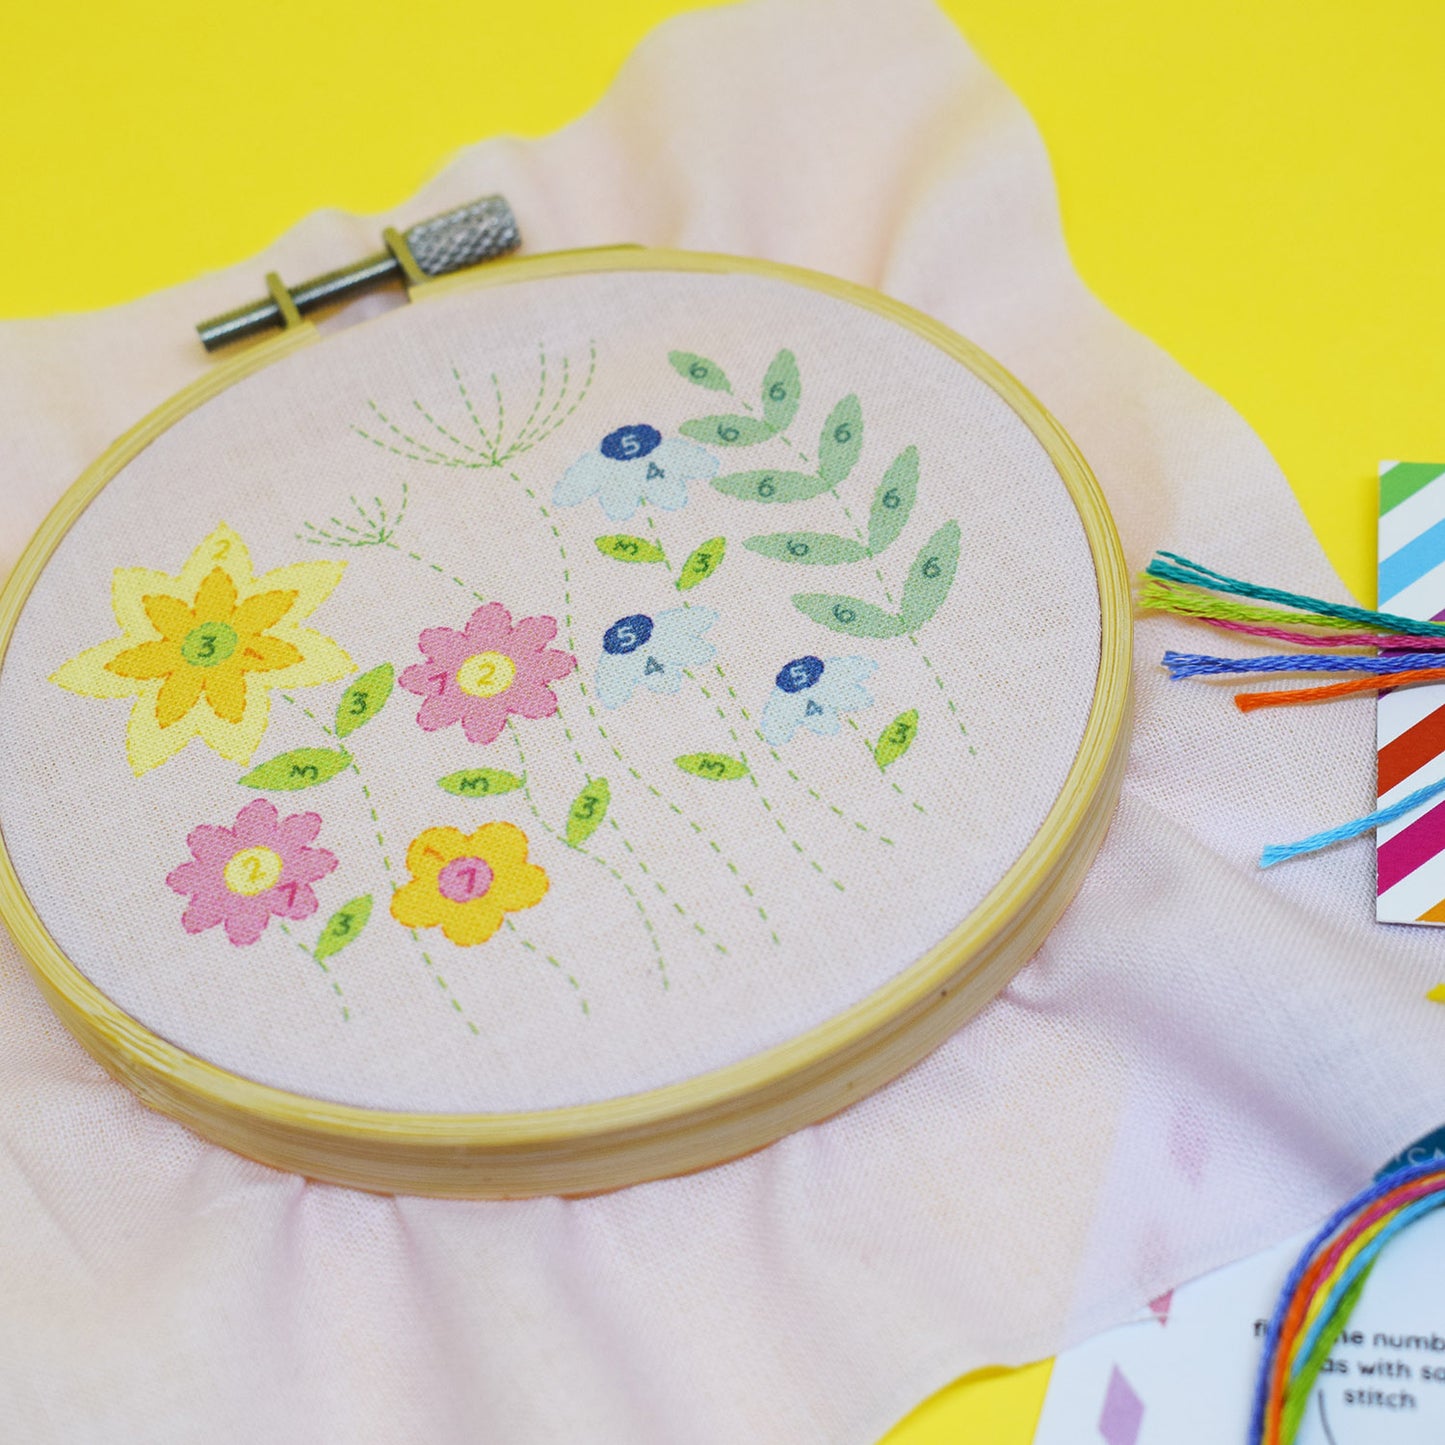 Meadow Flower Embroidery Kit